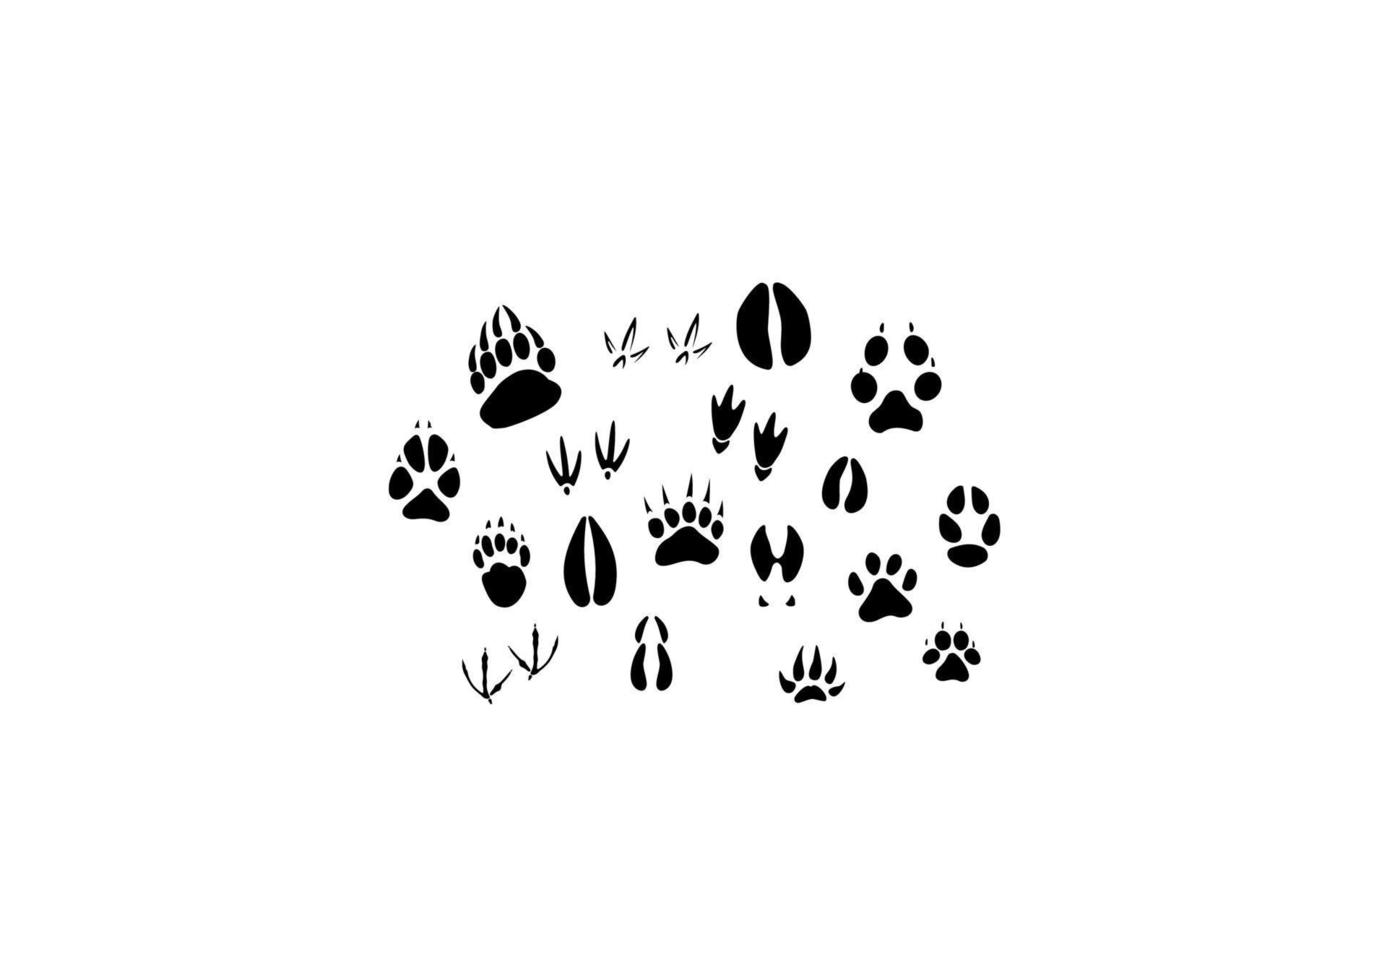 Animal footprints silhouettes vector